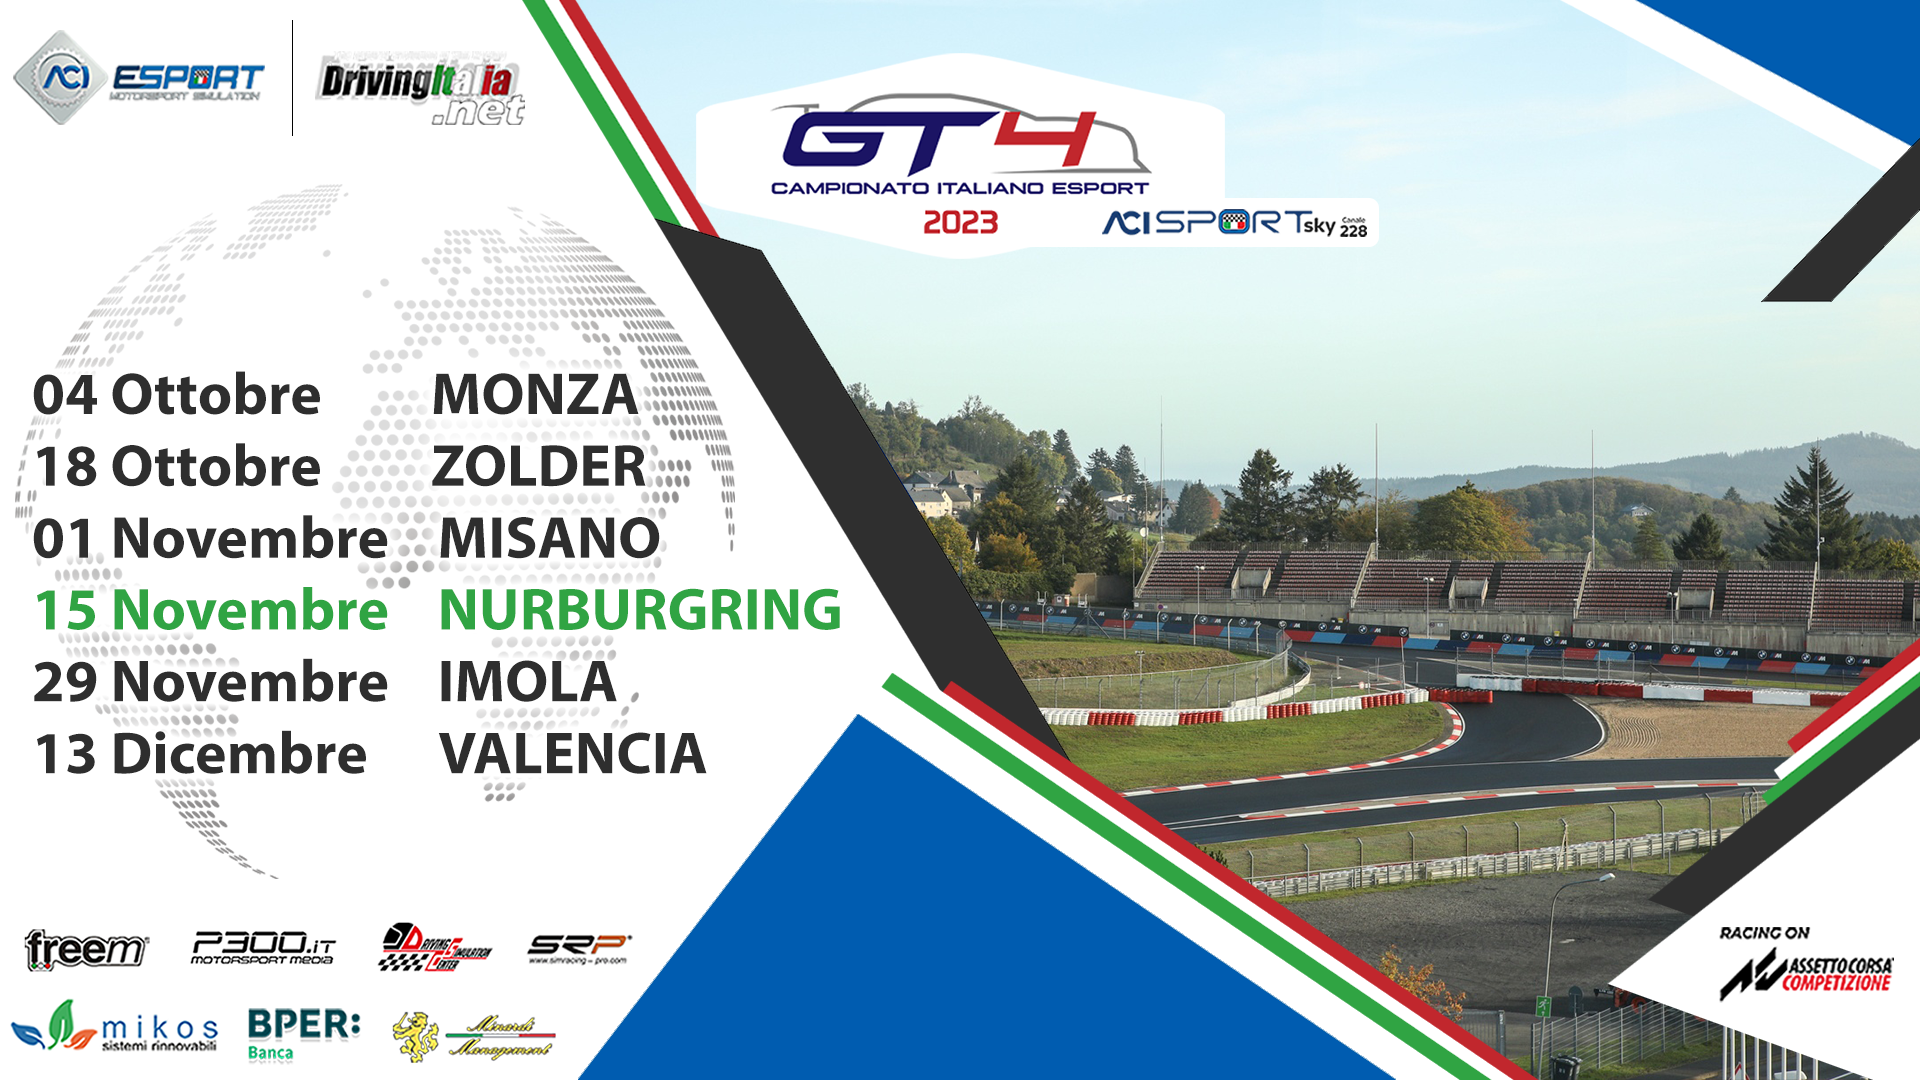 More information about "Campionato Italiano GT4 Sprint ACI Esport: mercoledi 15 il round 4 al Nurburgring"